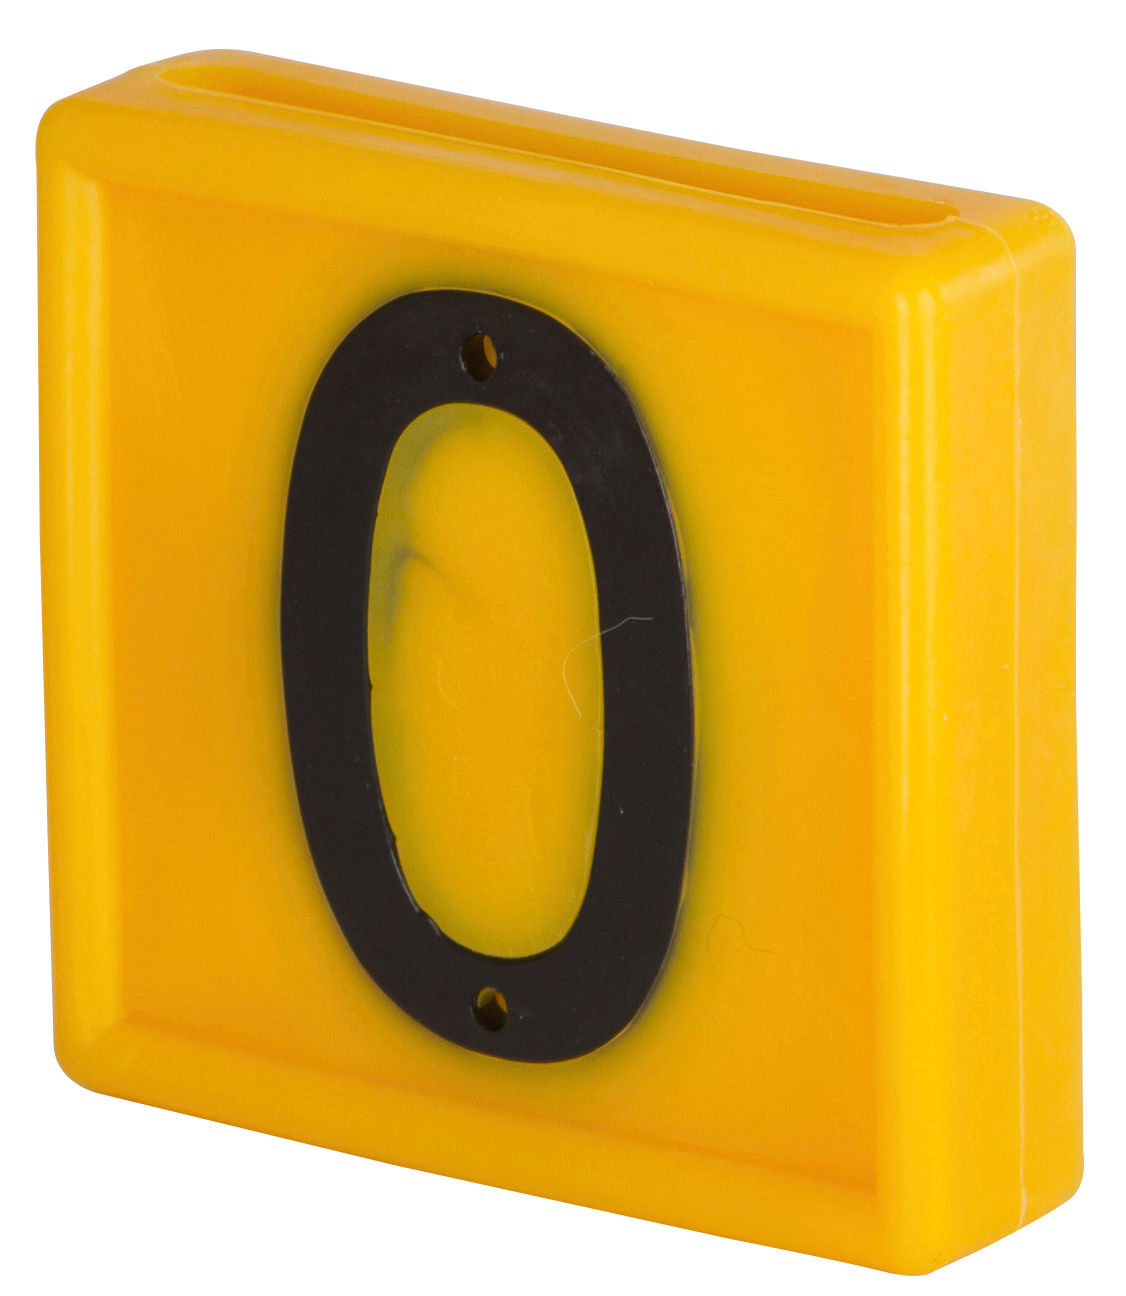 Nummernblock Nr. 0, gelb, einstellig, 44 x 46 mm